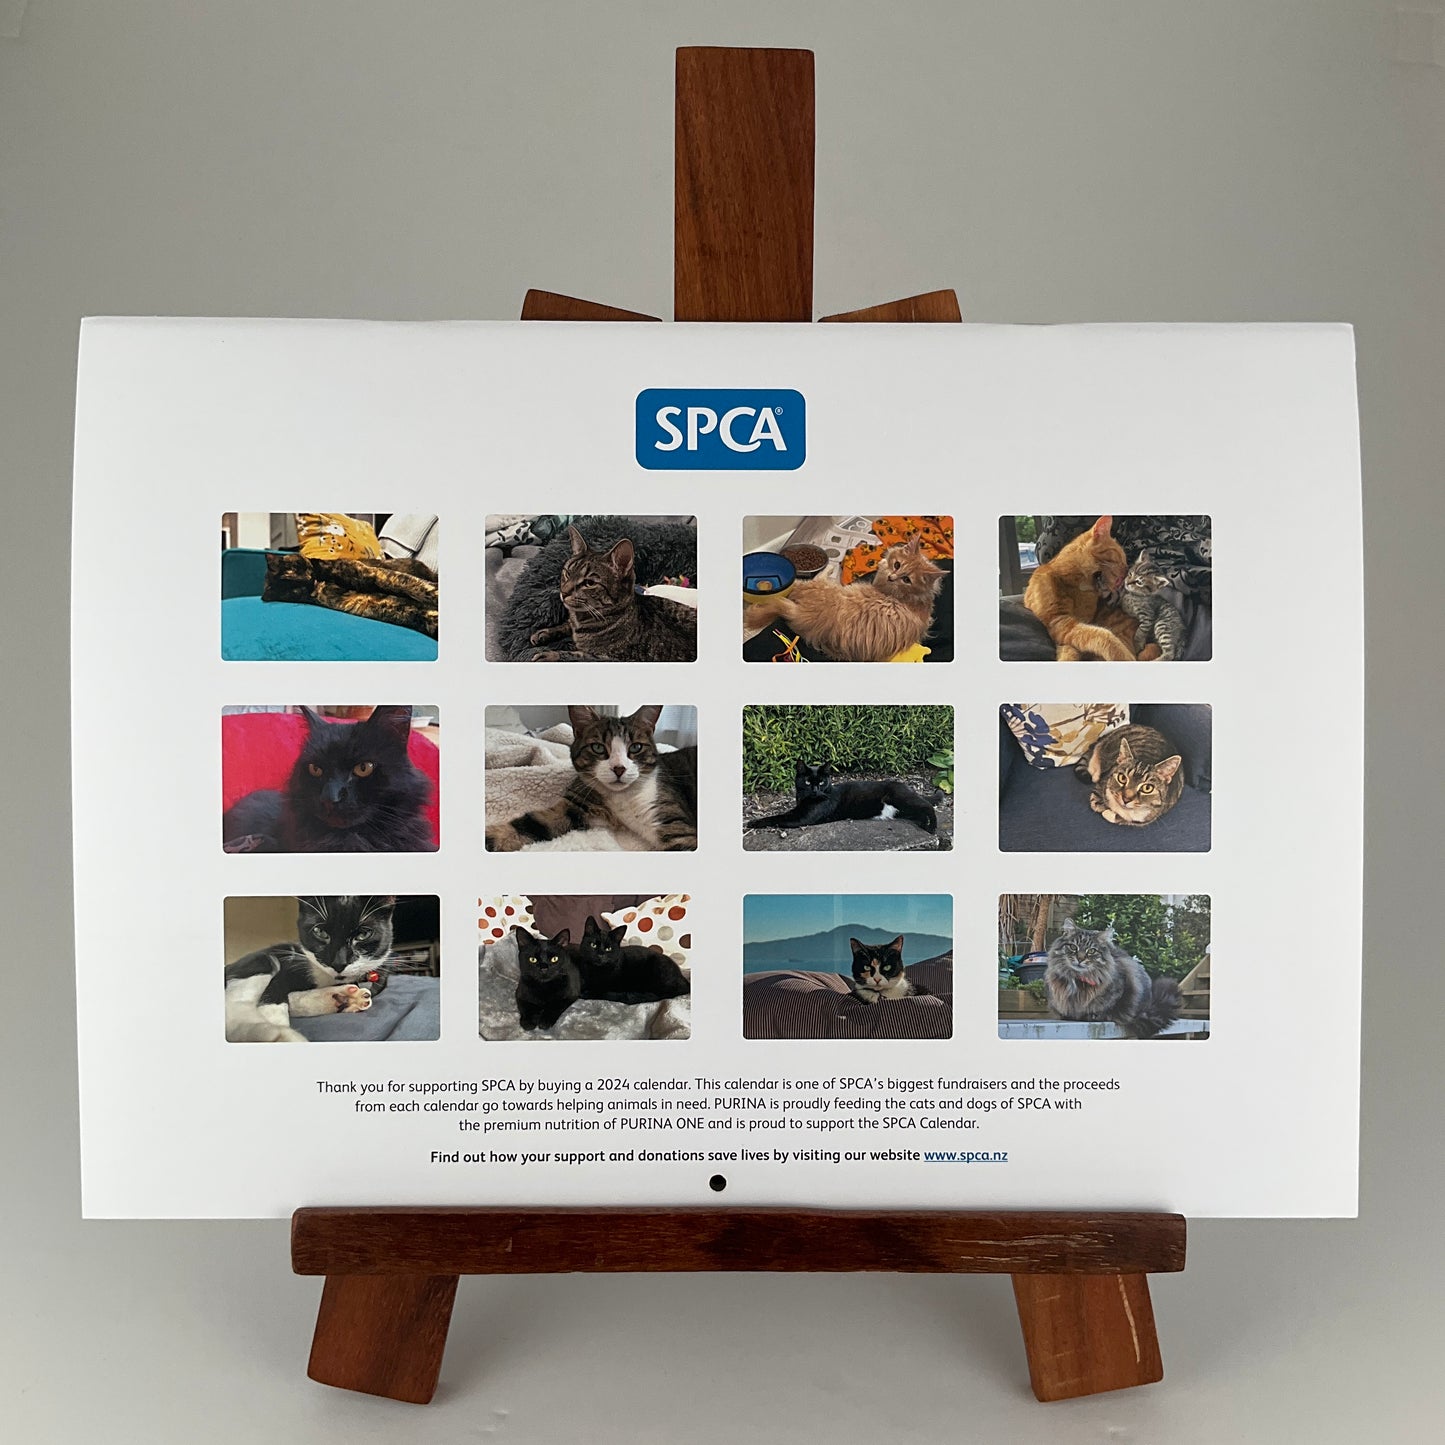 SPCA 2024 Annual Calendar - Cats